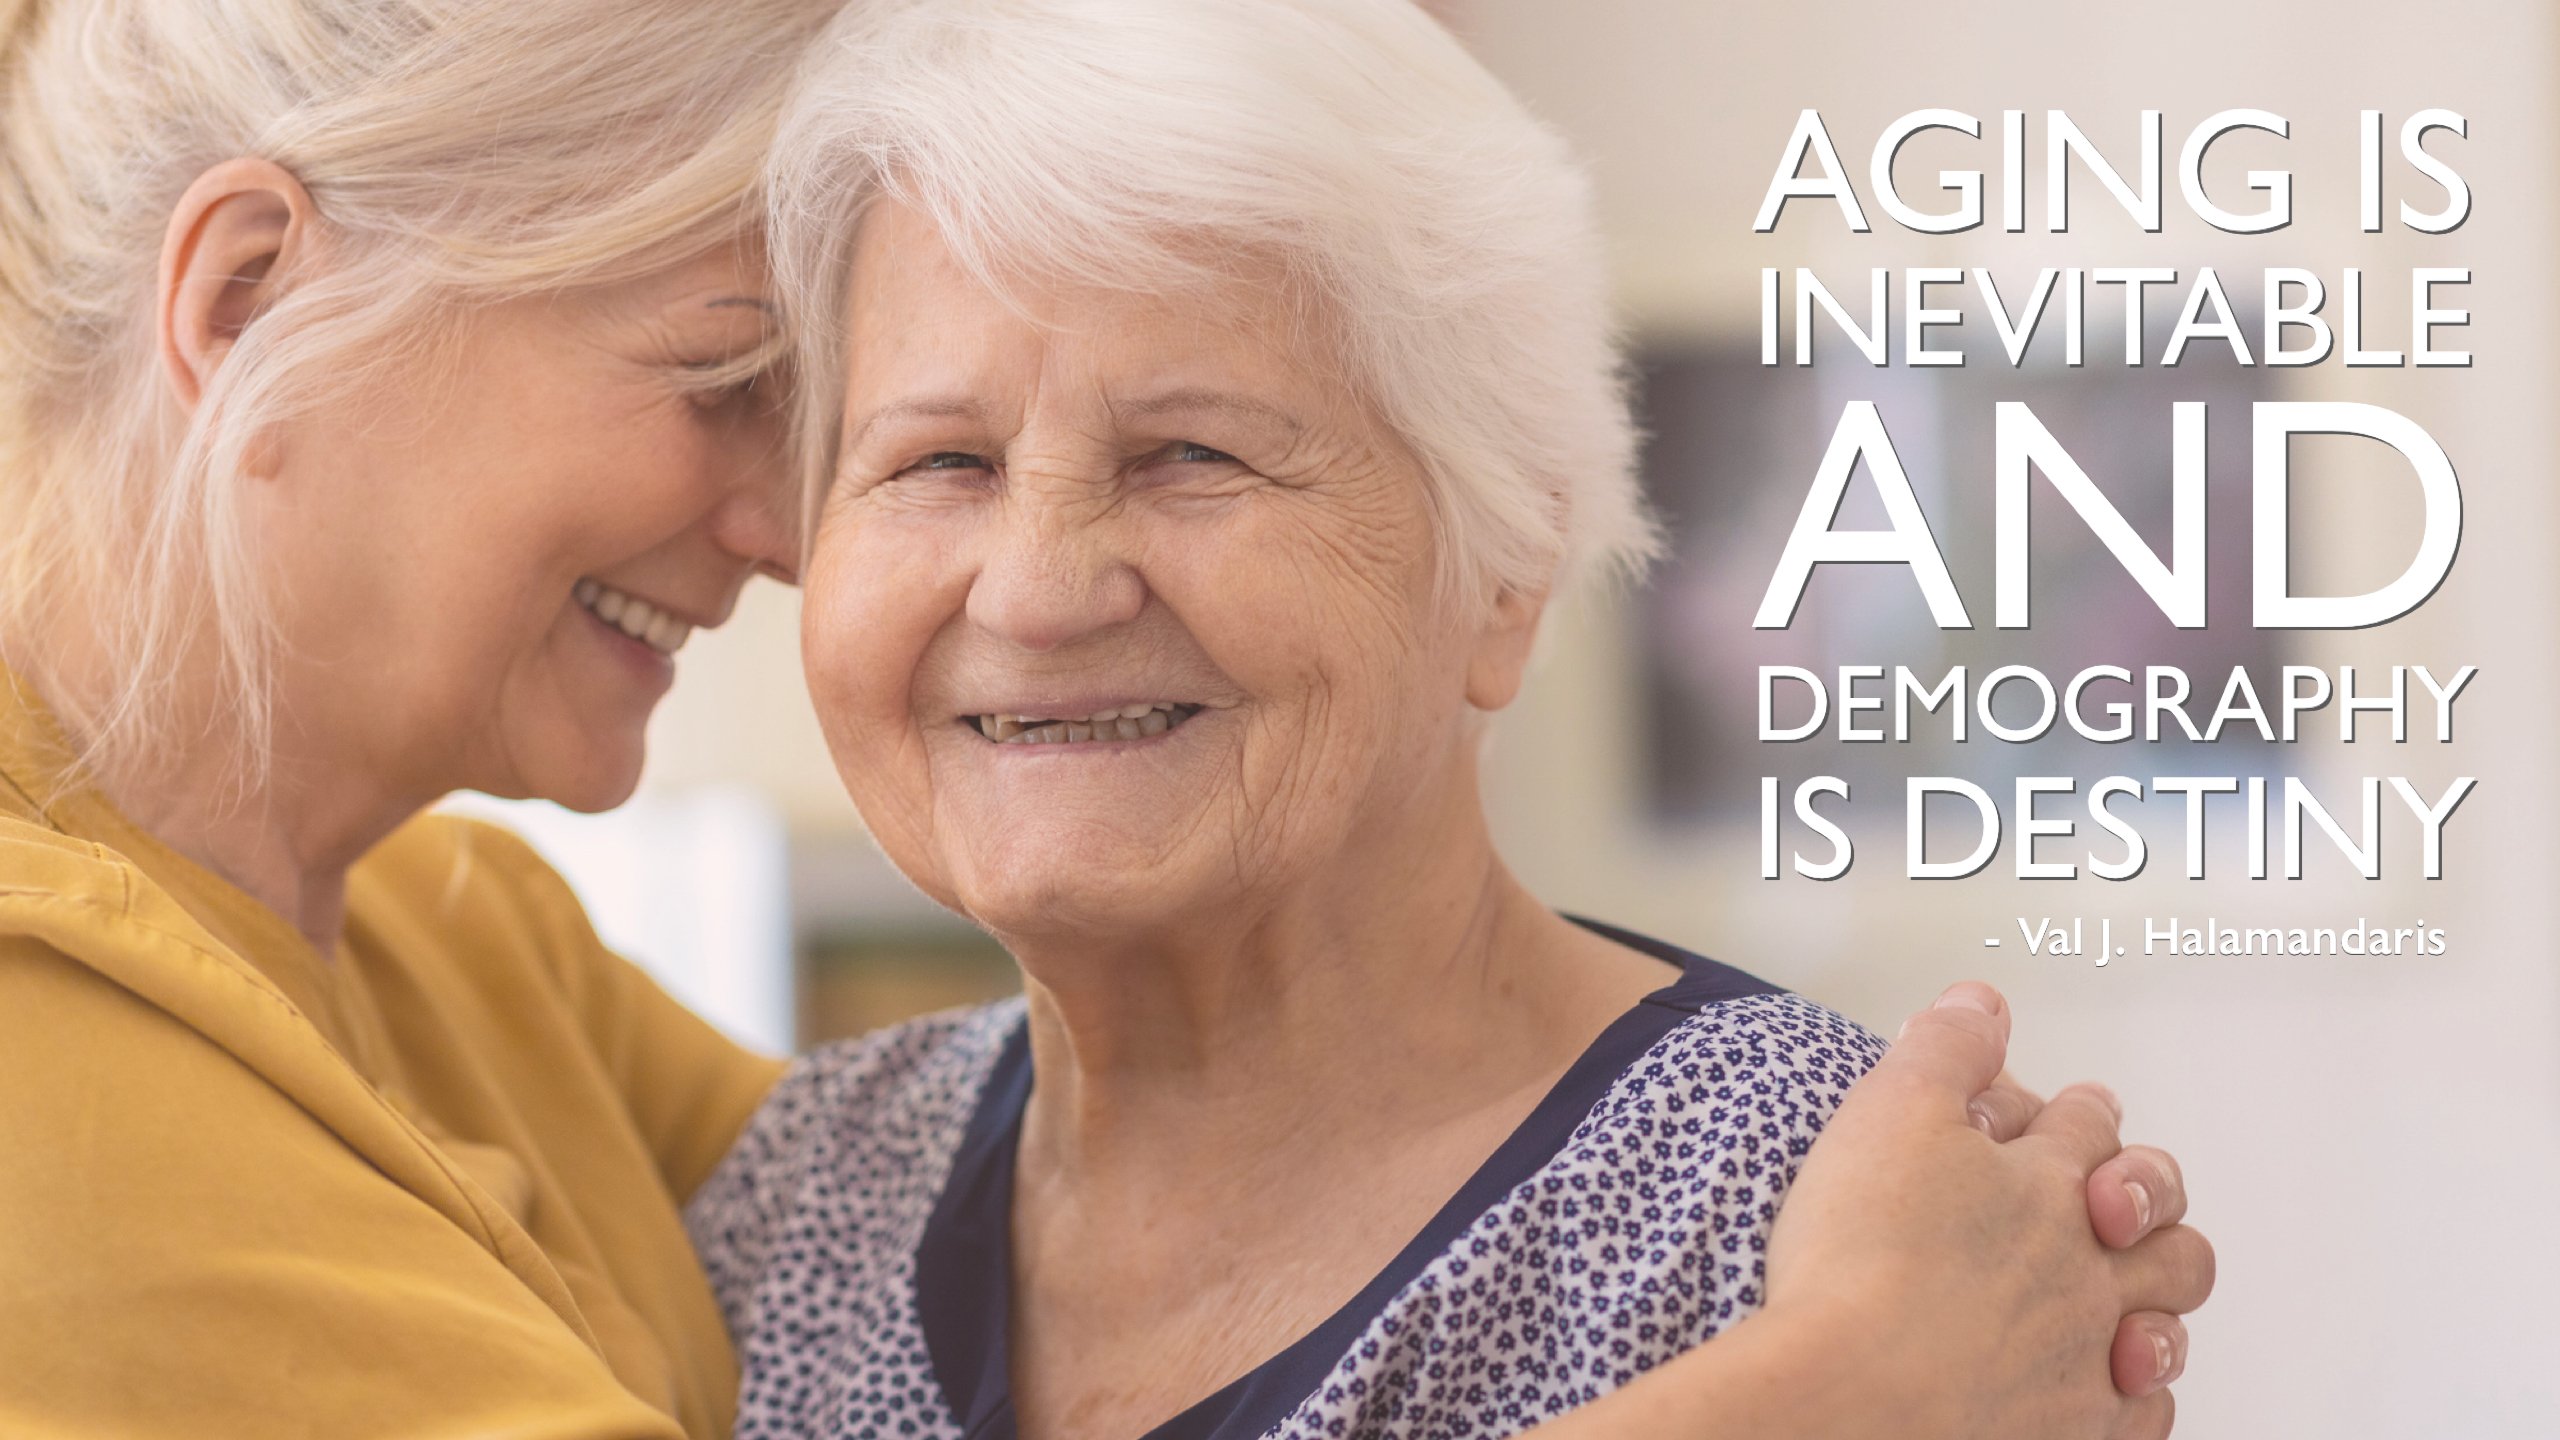 Aging is inevitable and demography is destiny.  Val J. Halamandaris